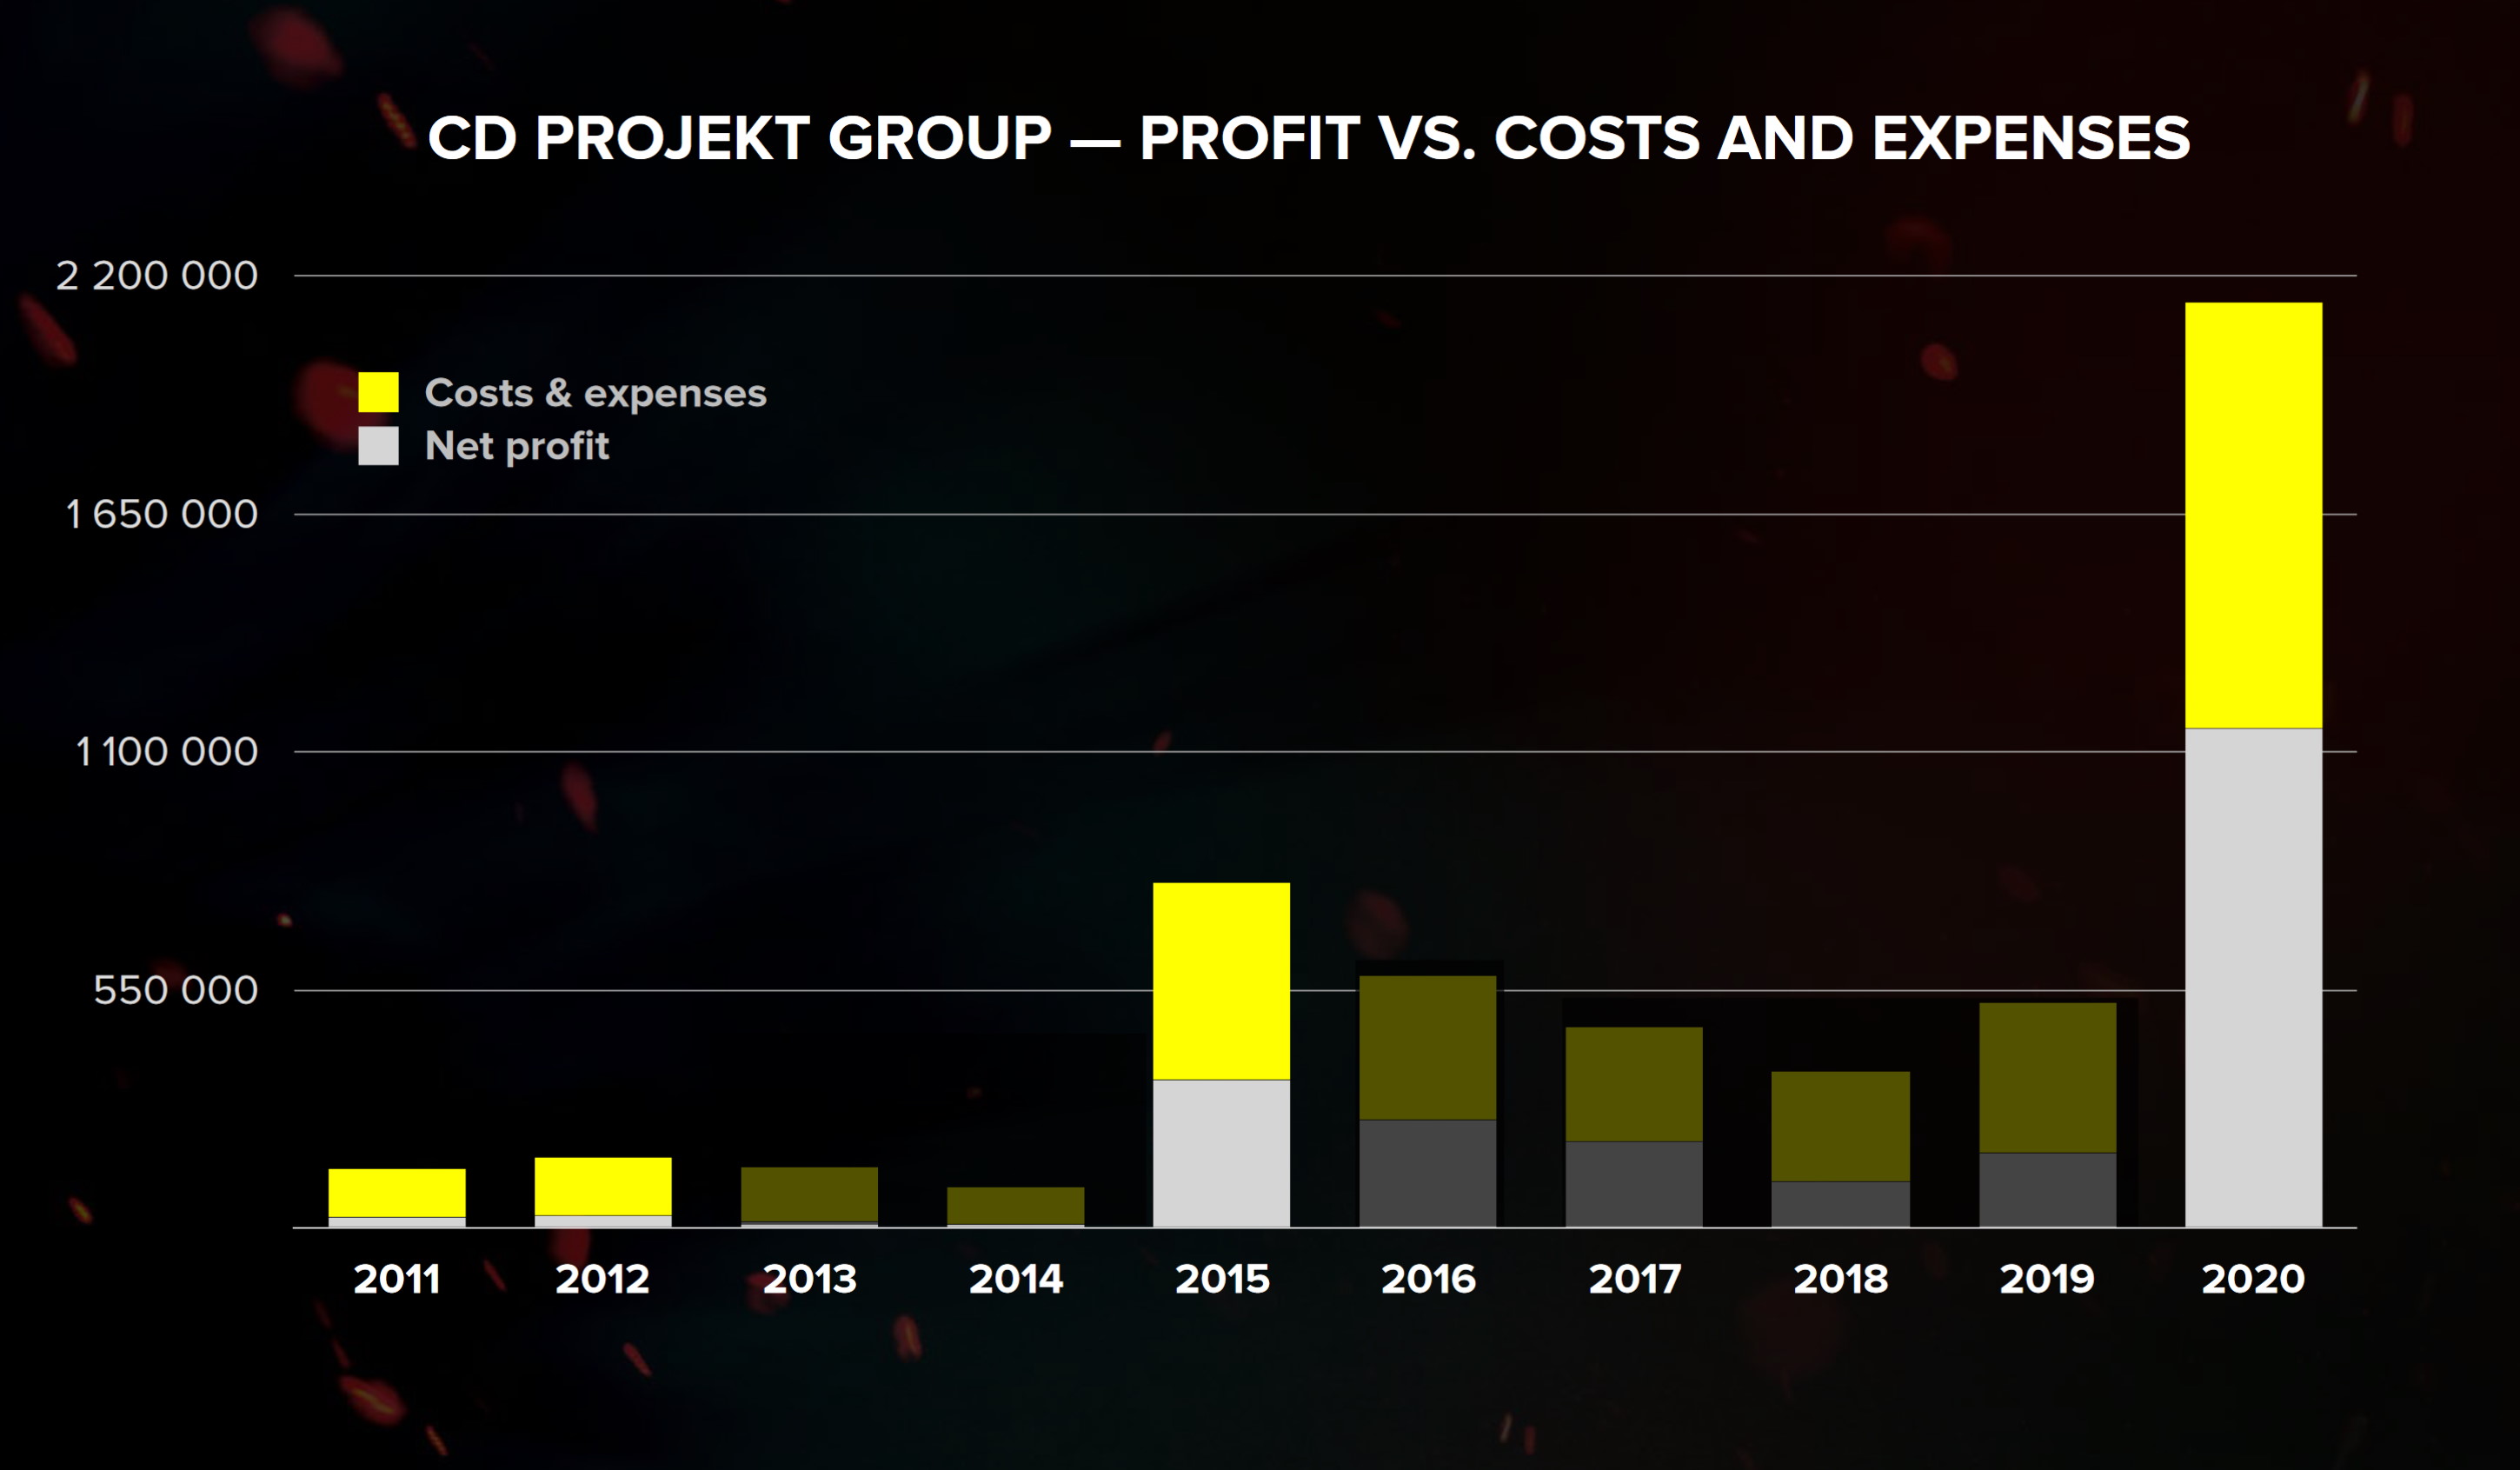 CD Projekt 2020 profit